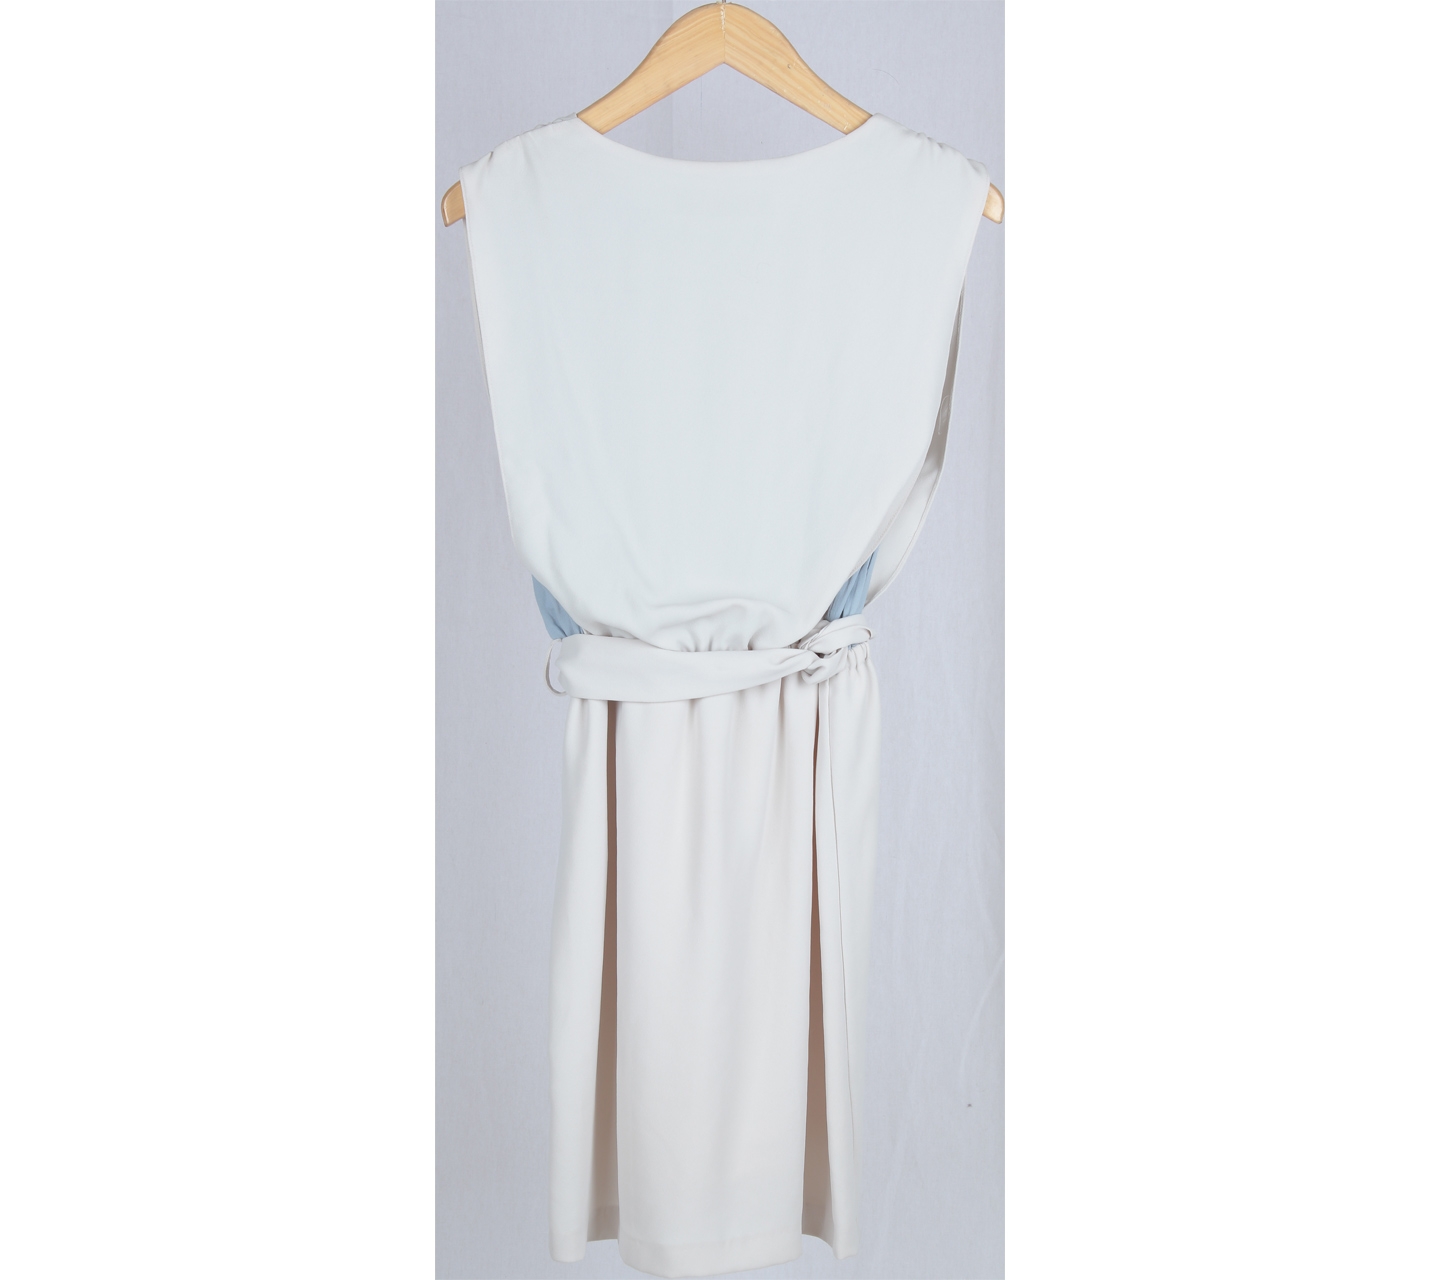 Bonsui Cream And Blue Belted Mini Dress